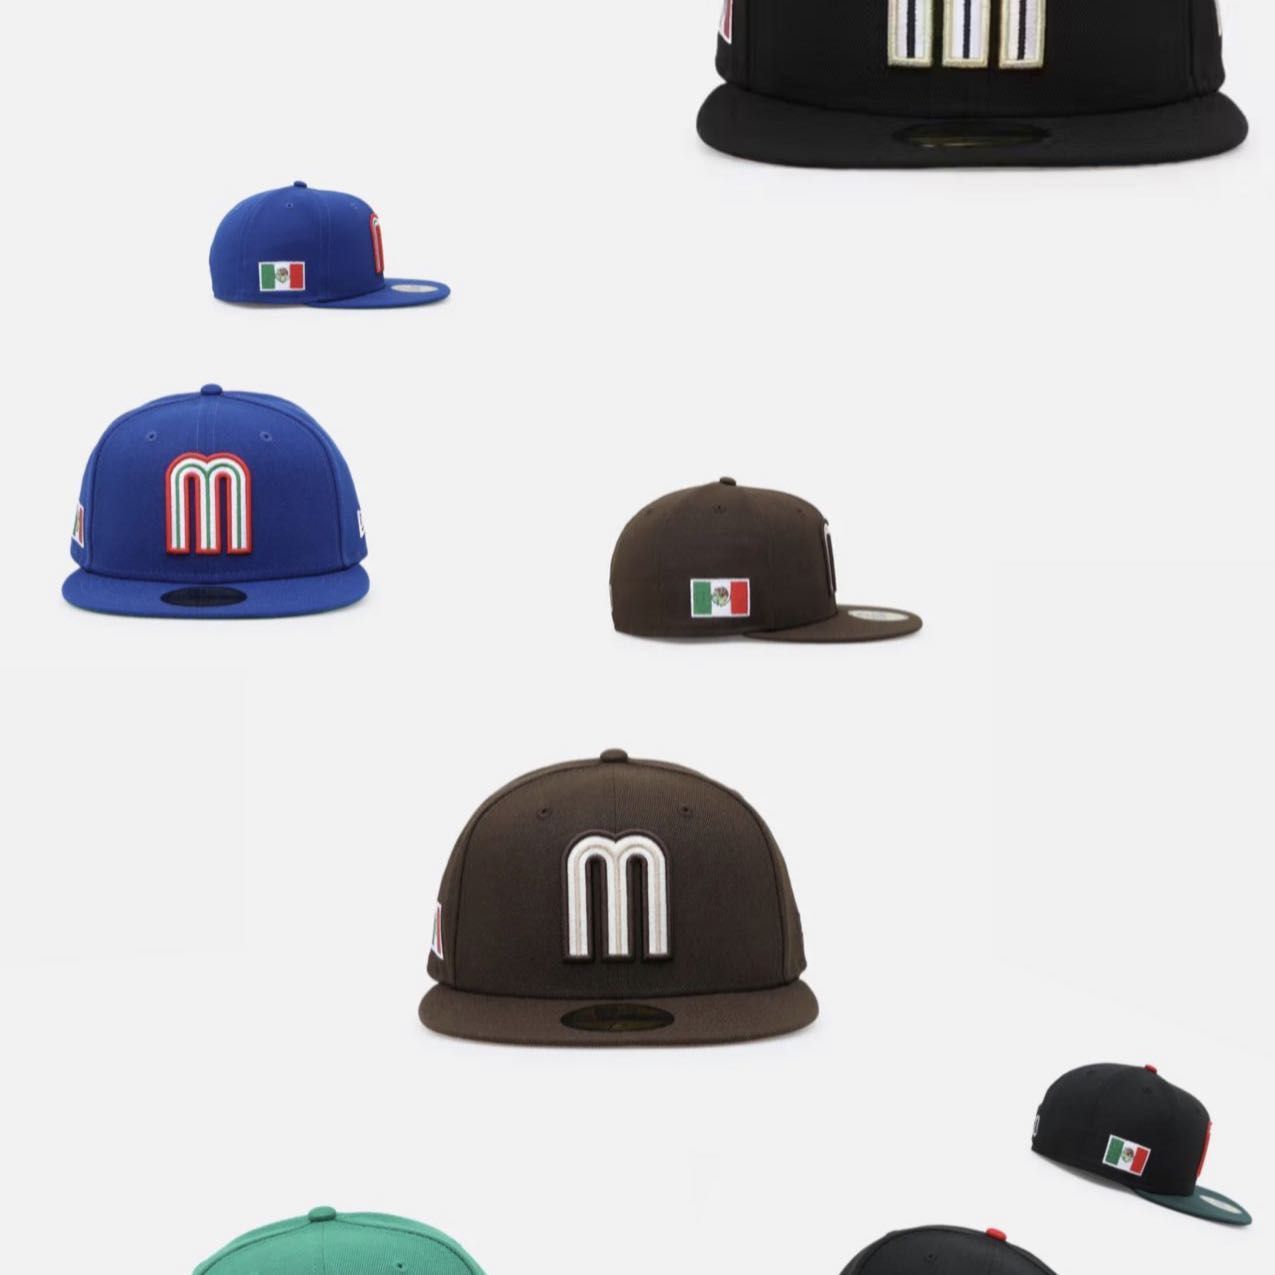 Hats portfolio